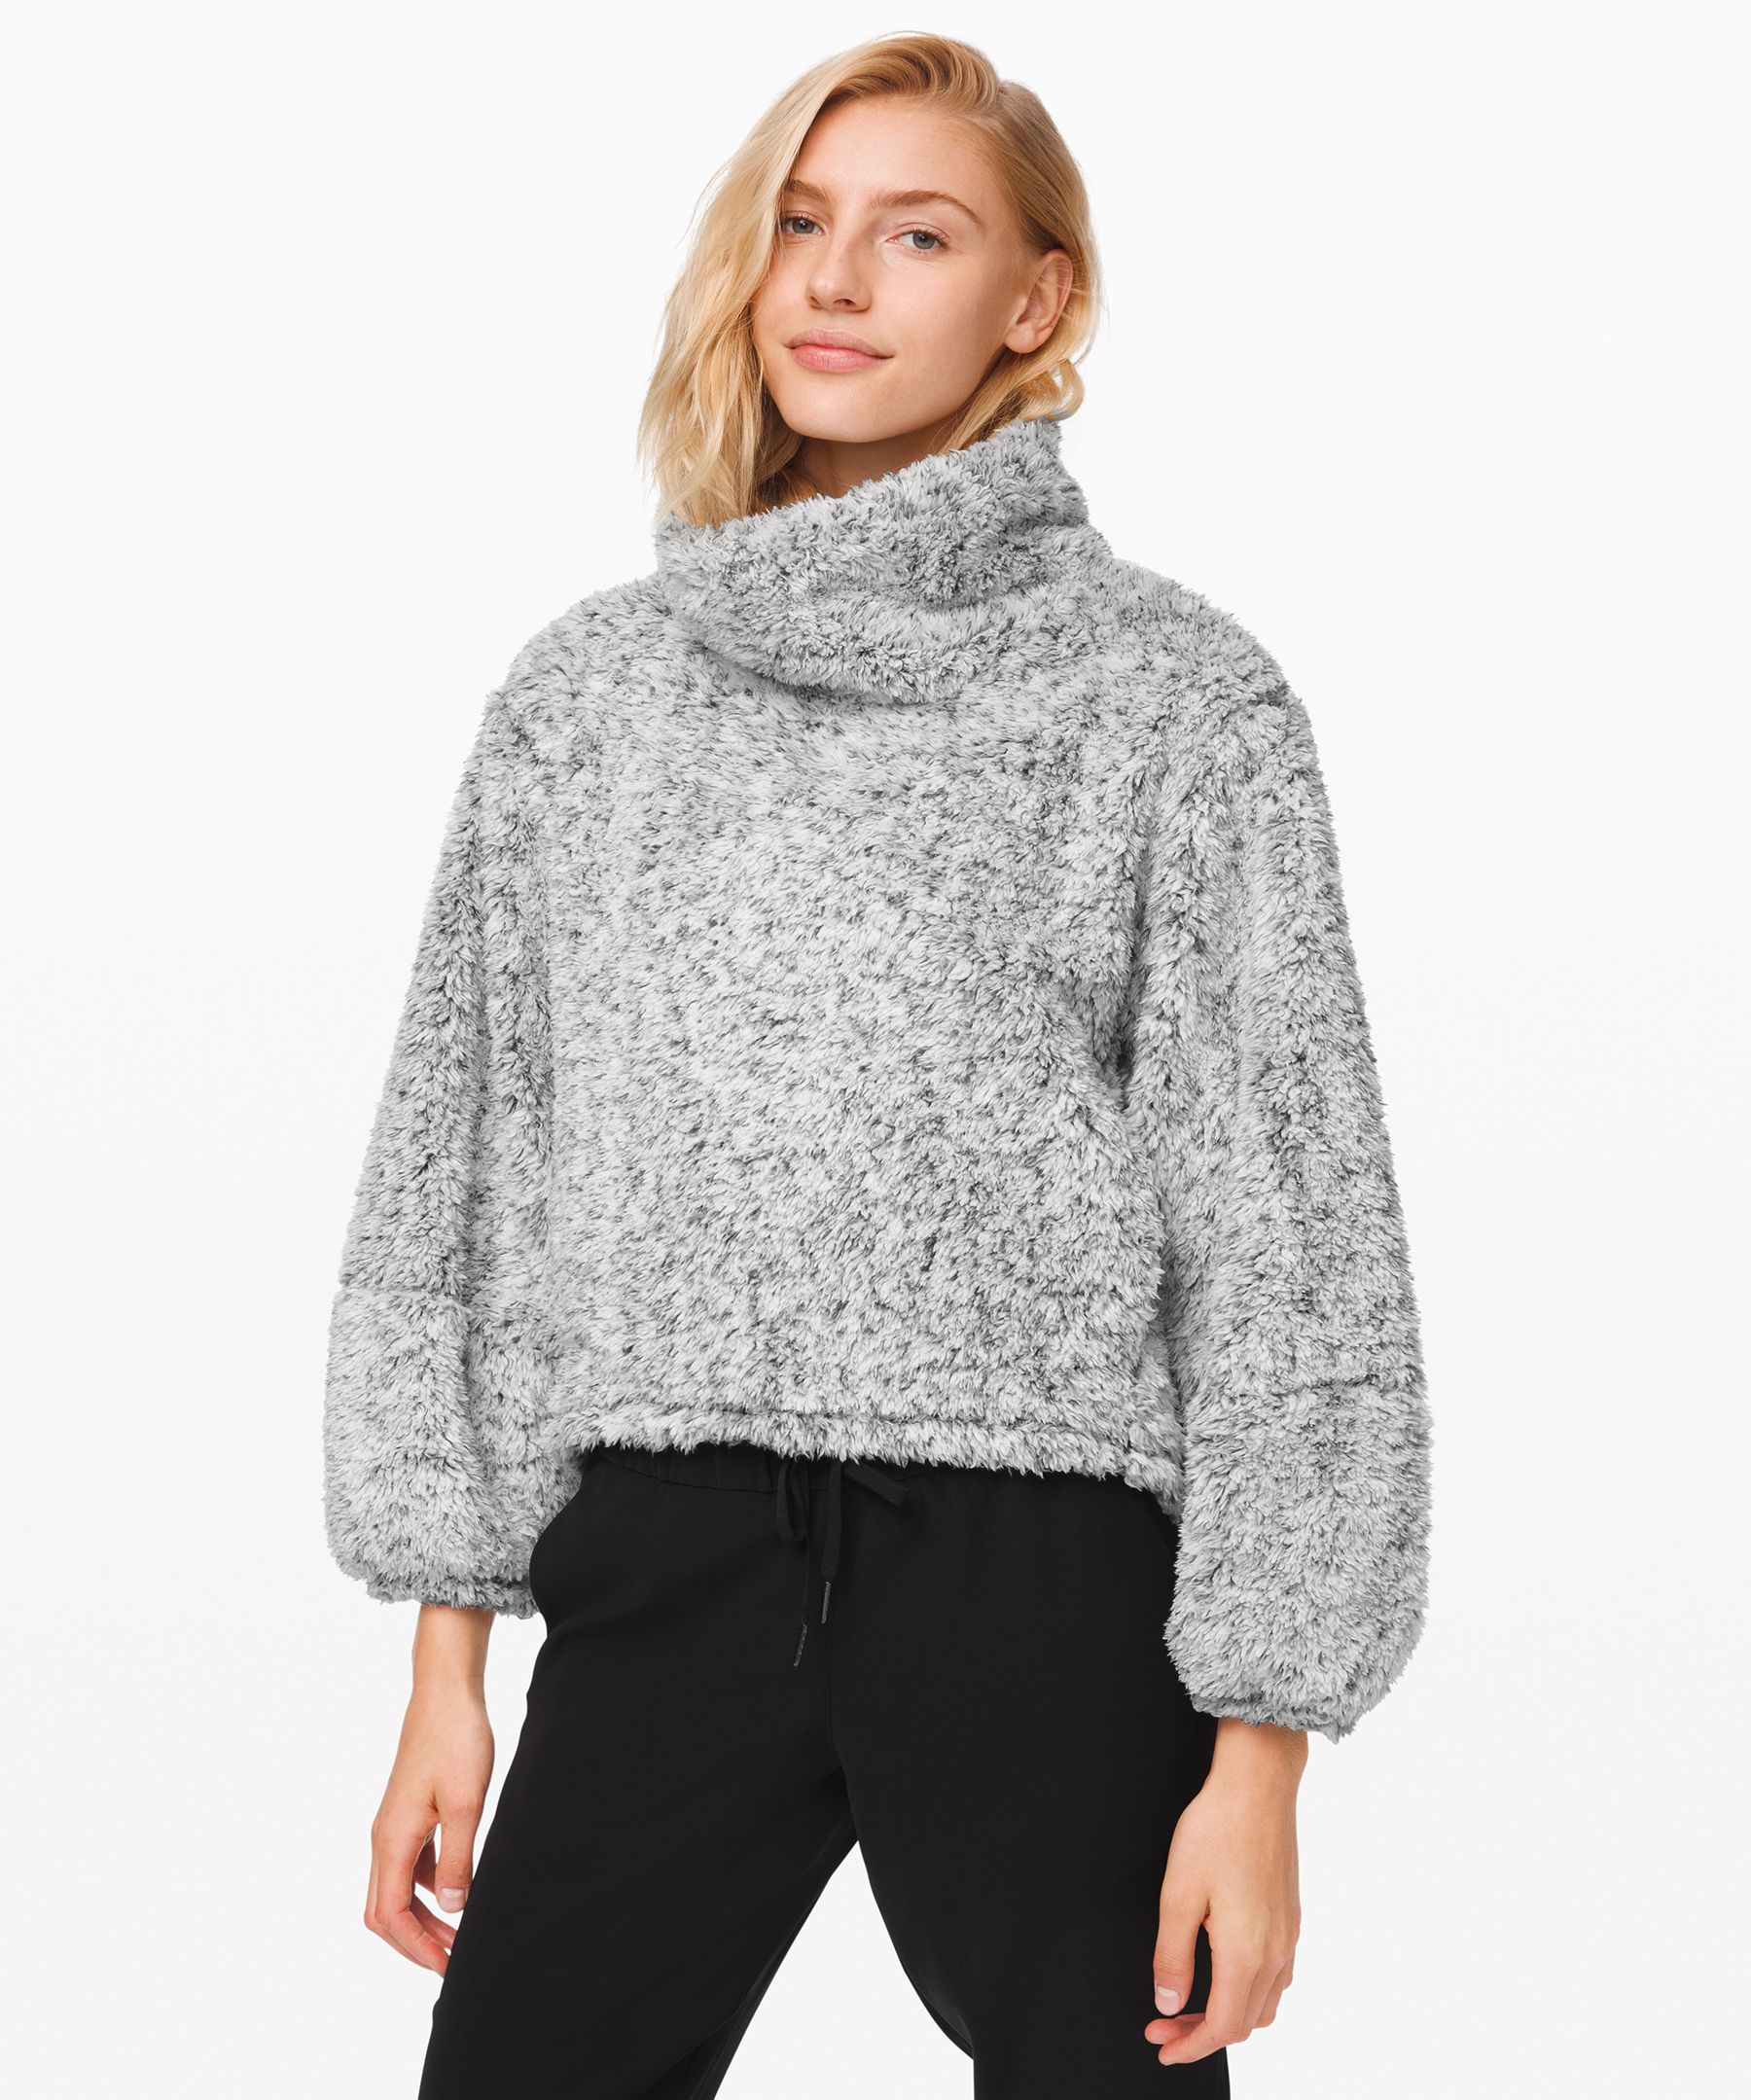 lululemon warm and restore sweater